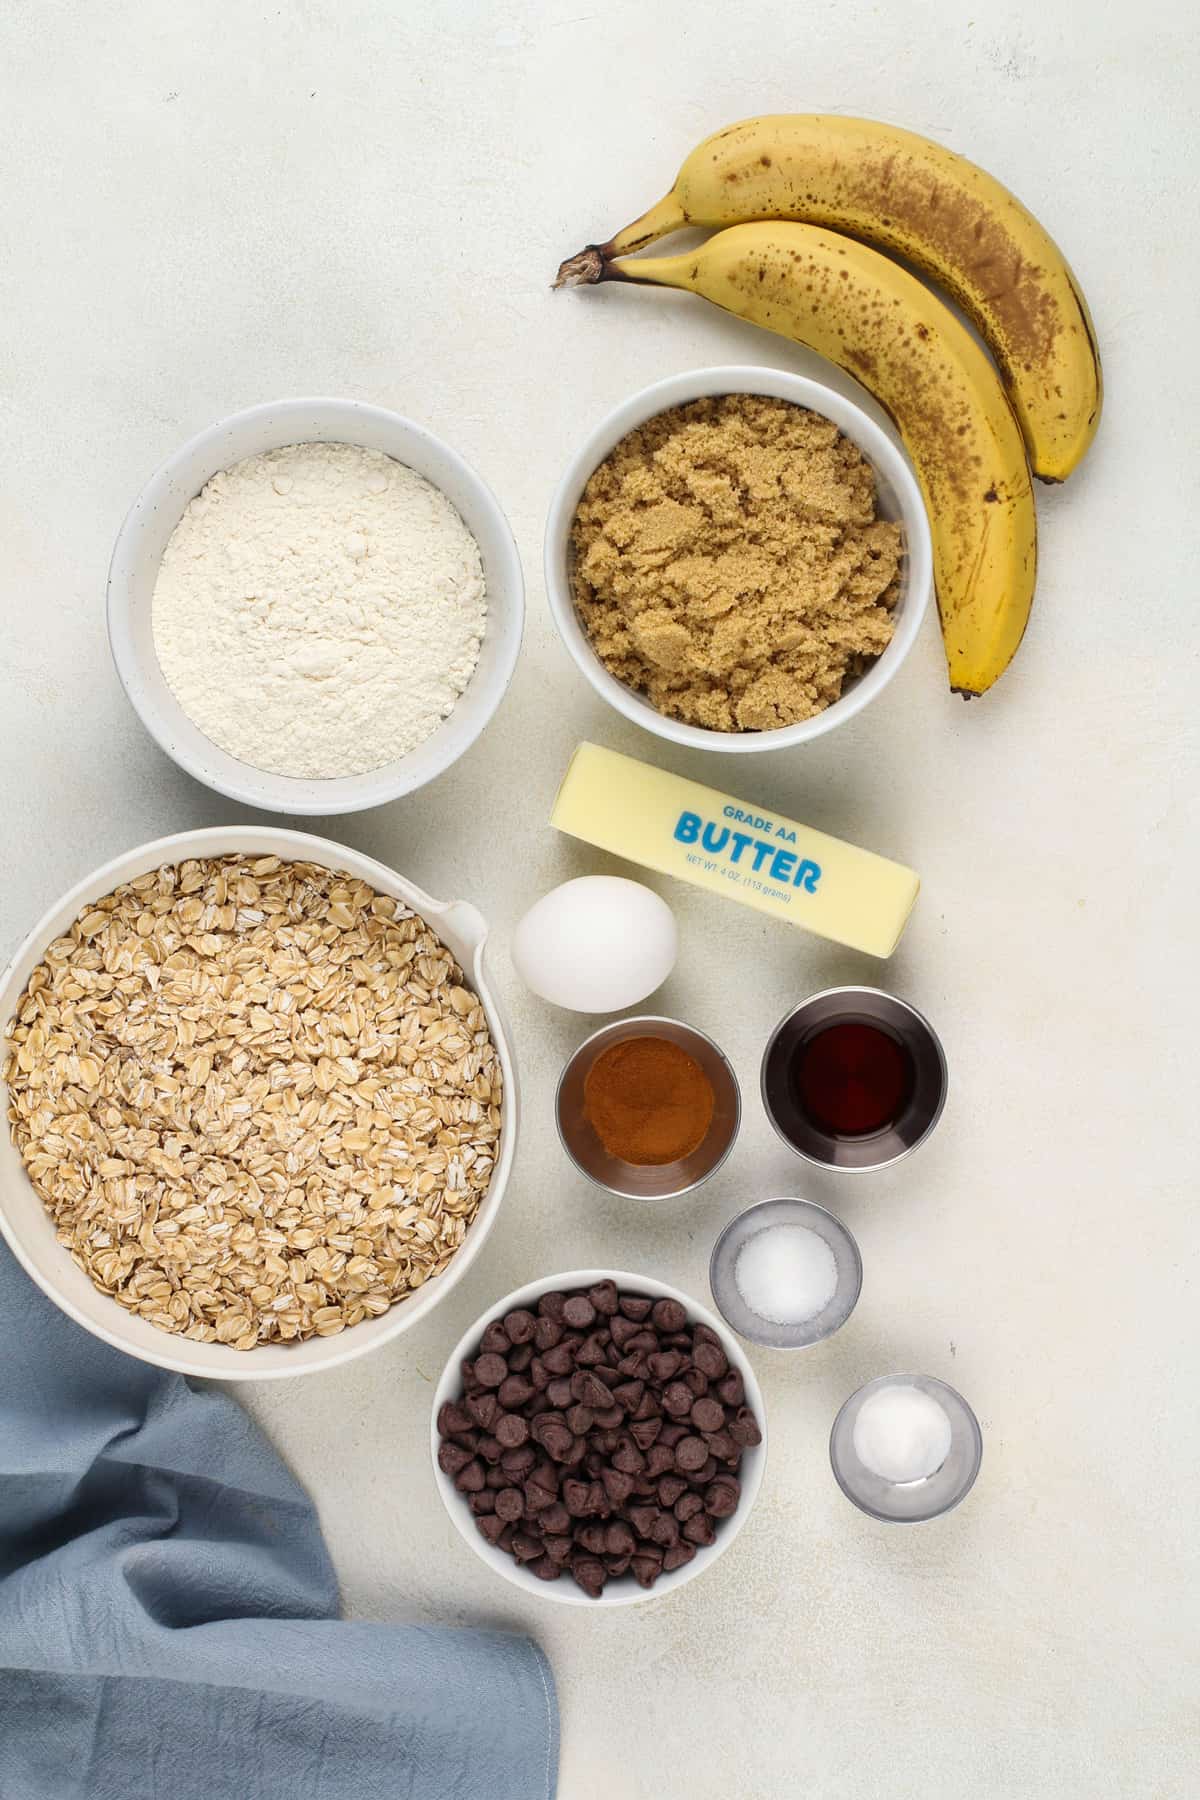 Banana oatmeal cookie ingredients arranged on a beige countertop.